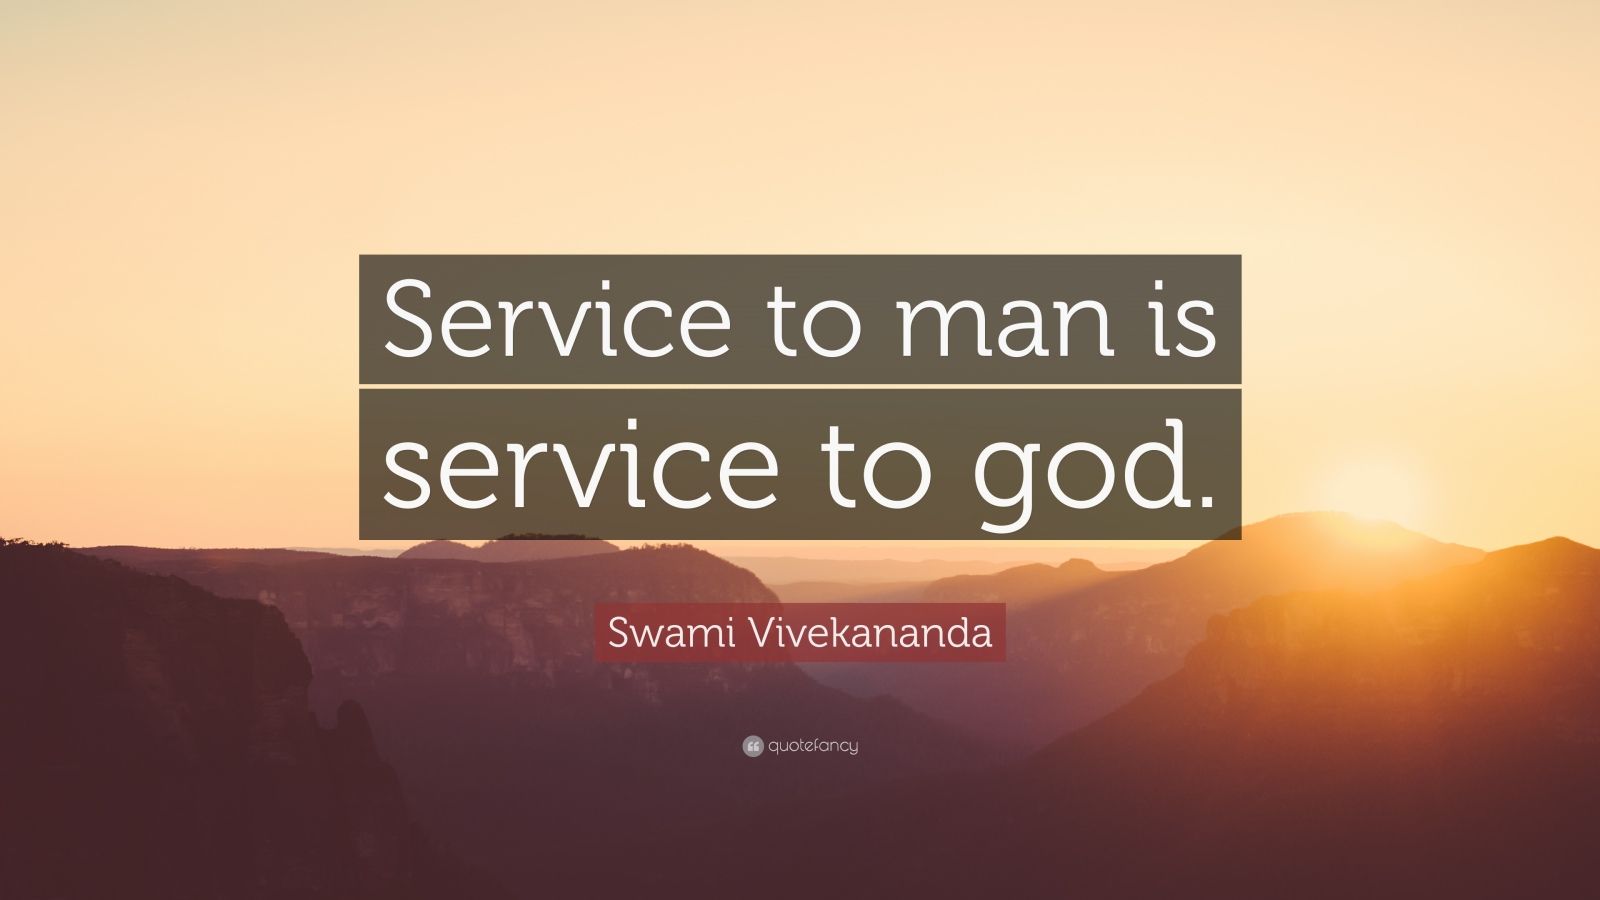 Service to man is service to god : Likha Saya